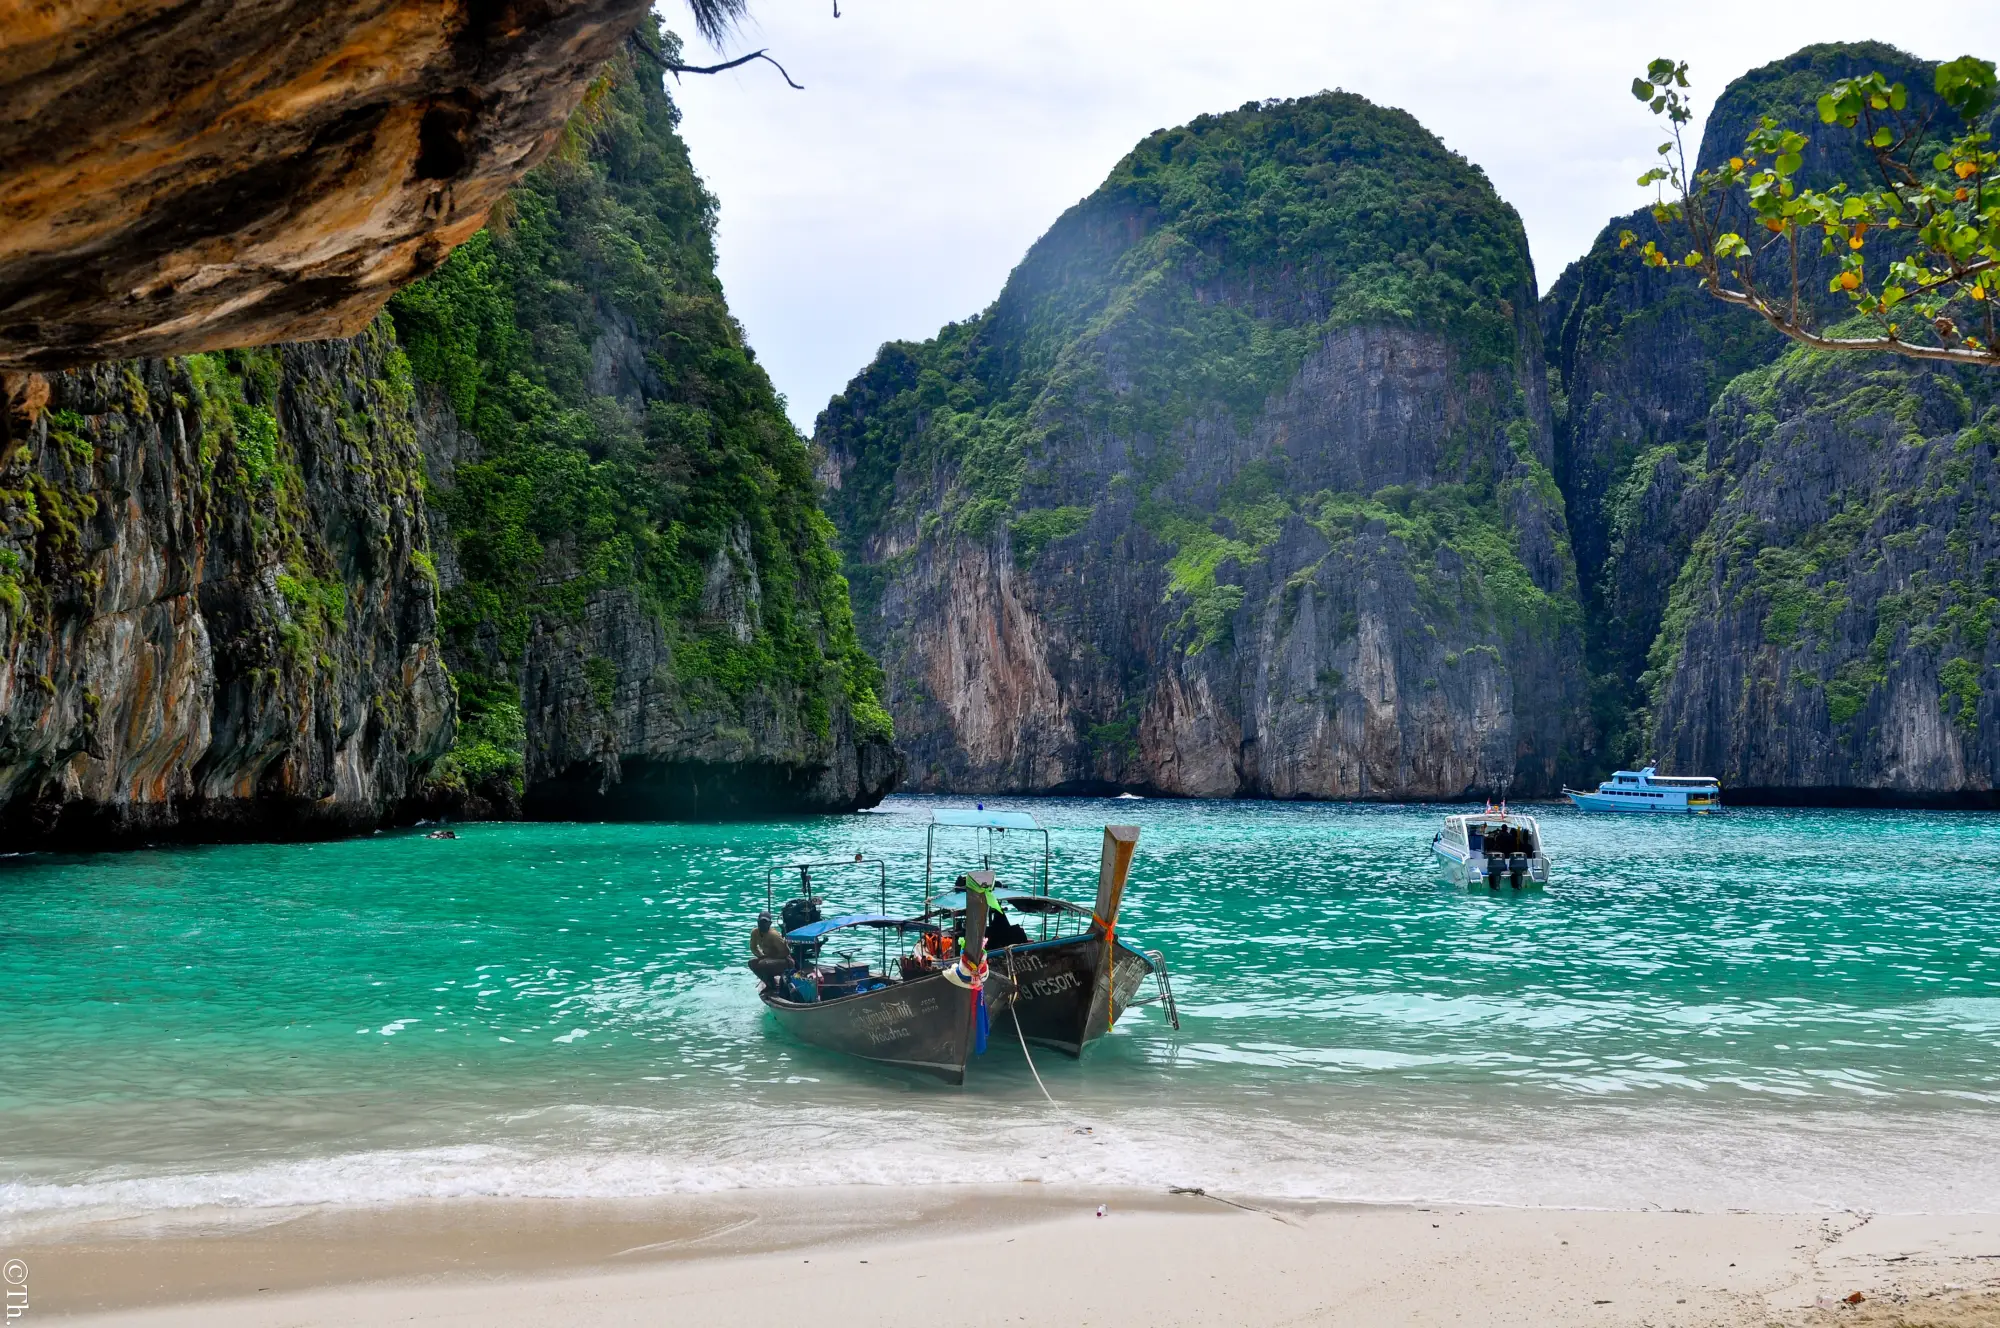 Maya Bay - insula renumita a Thailandei interzisa turistilor 4 luni pe an